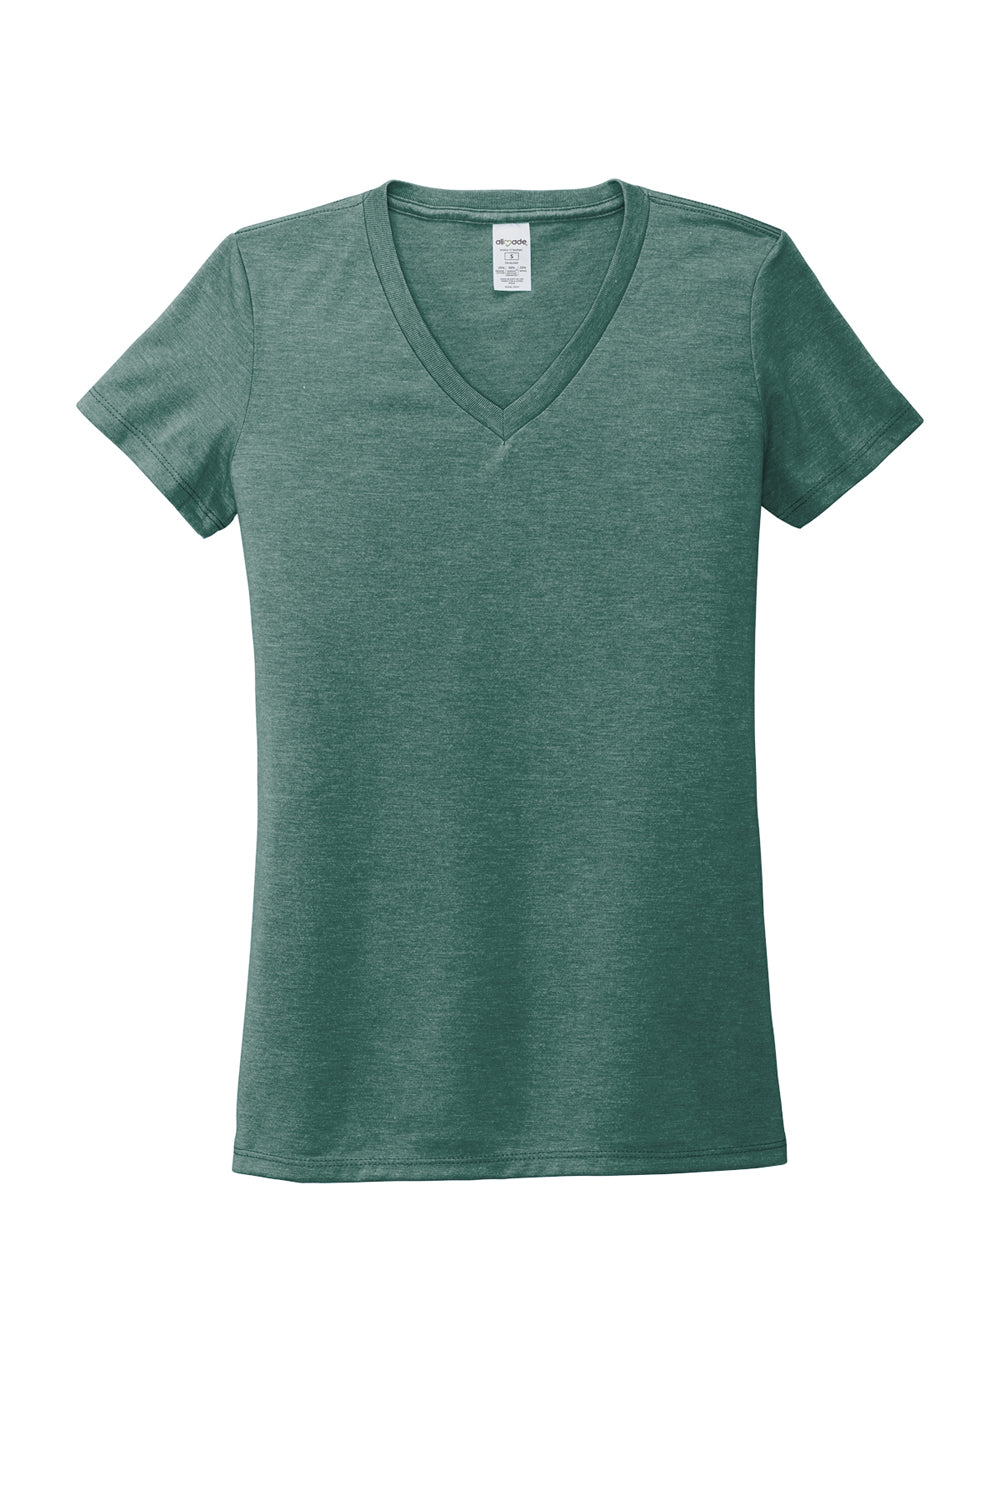 Allmade AL2018 Womens Short Sleeve V-Neck T-Shirt Deep Sea Green Flat Front